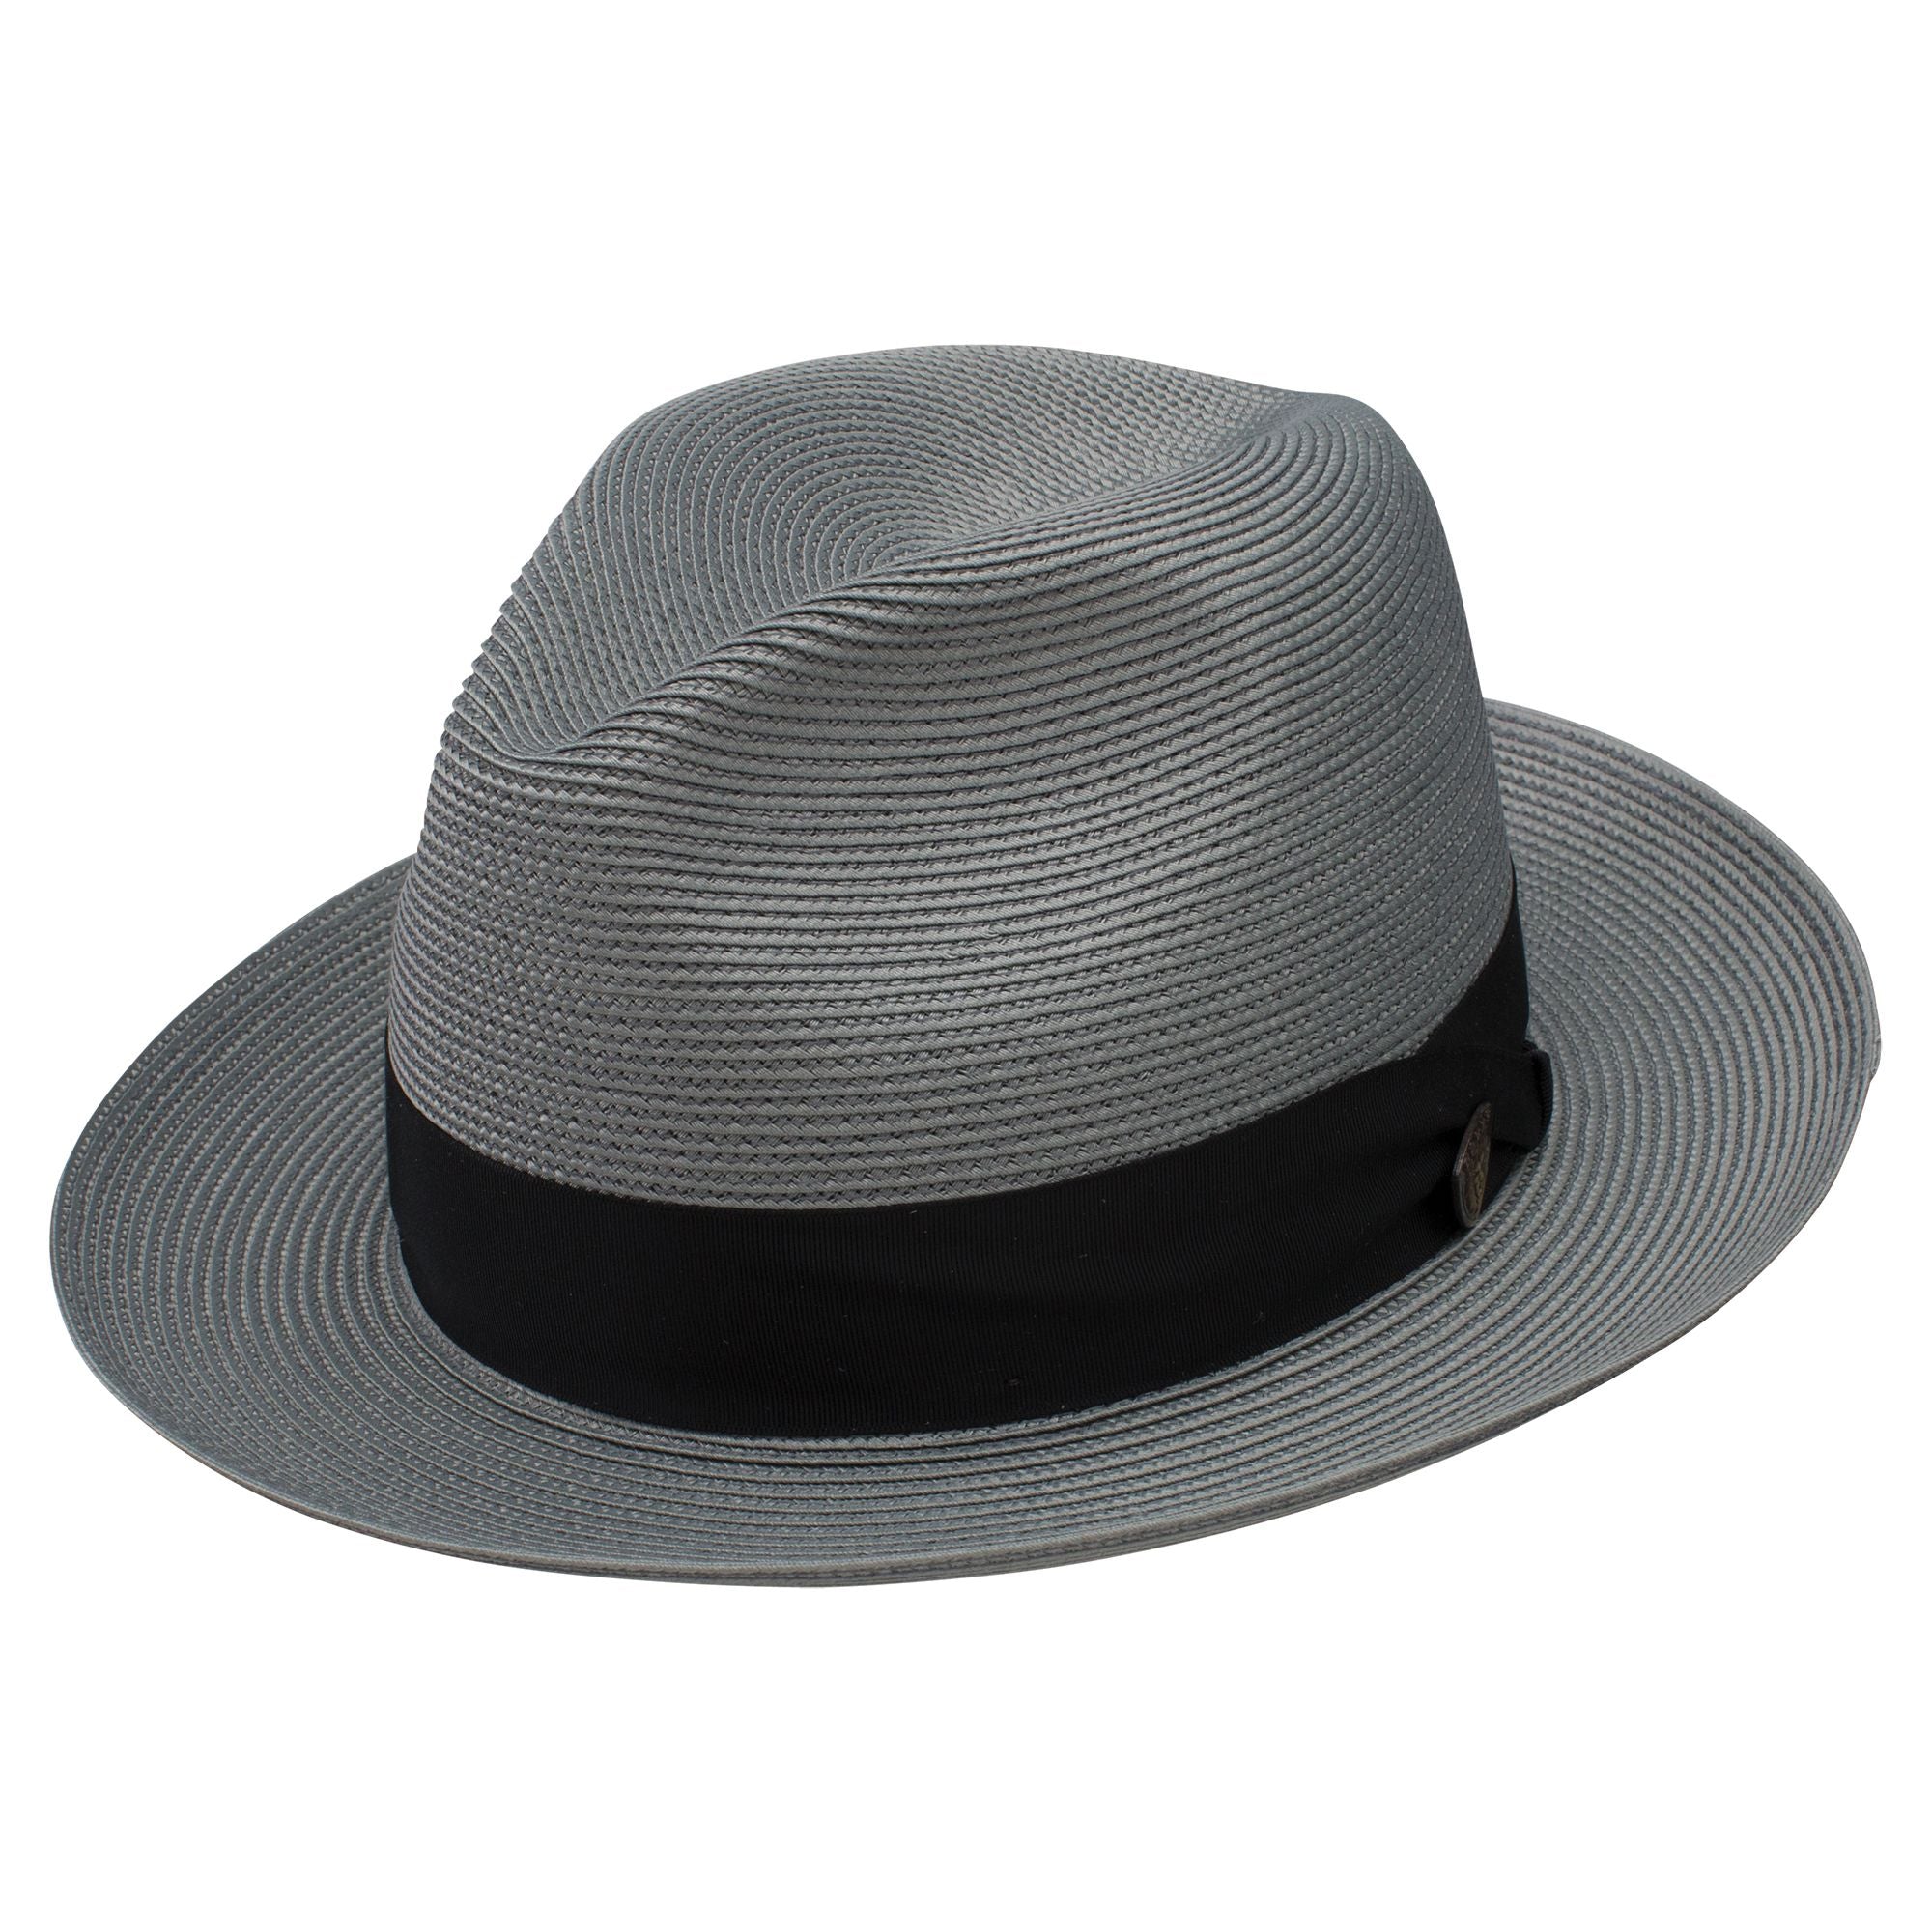 Dobbs Rosebud Straw Fedora Hat in Grey